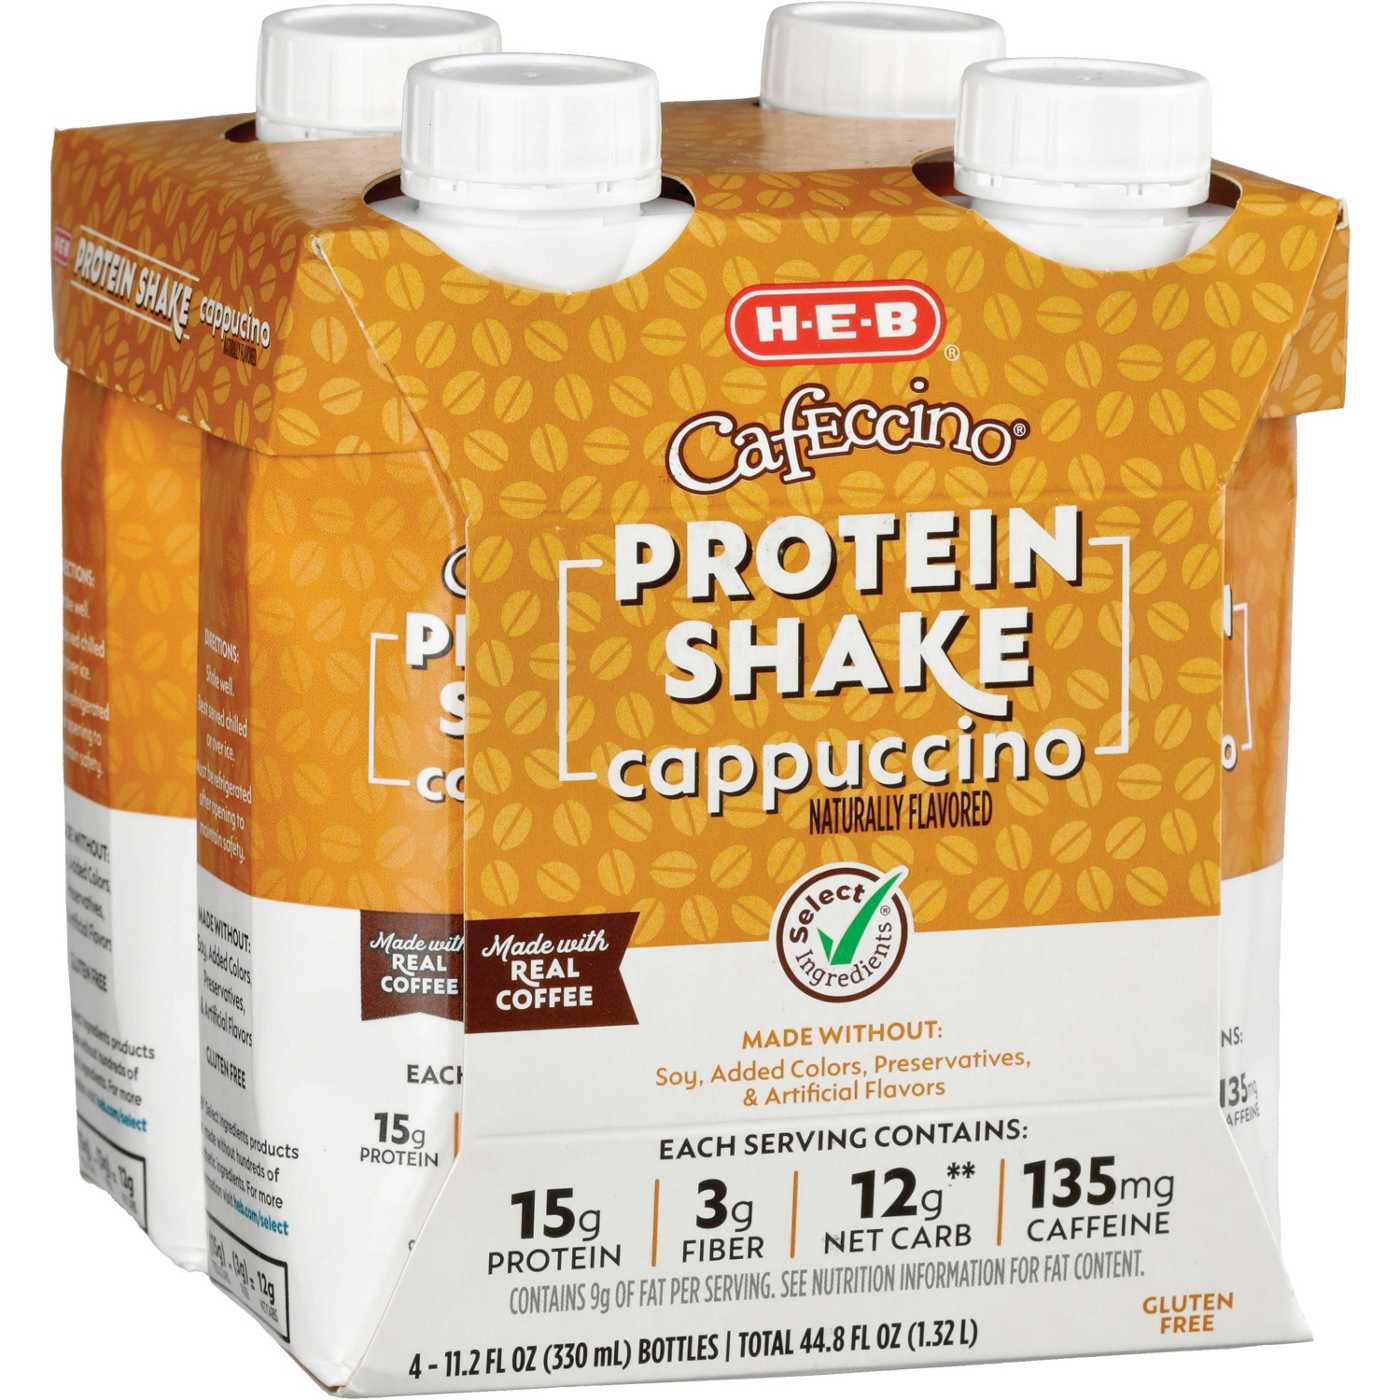 H-E-B Cafeccino 15g Protein Shake - Cappuccino; image 2 of 2